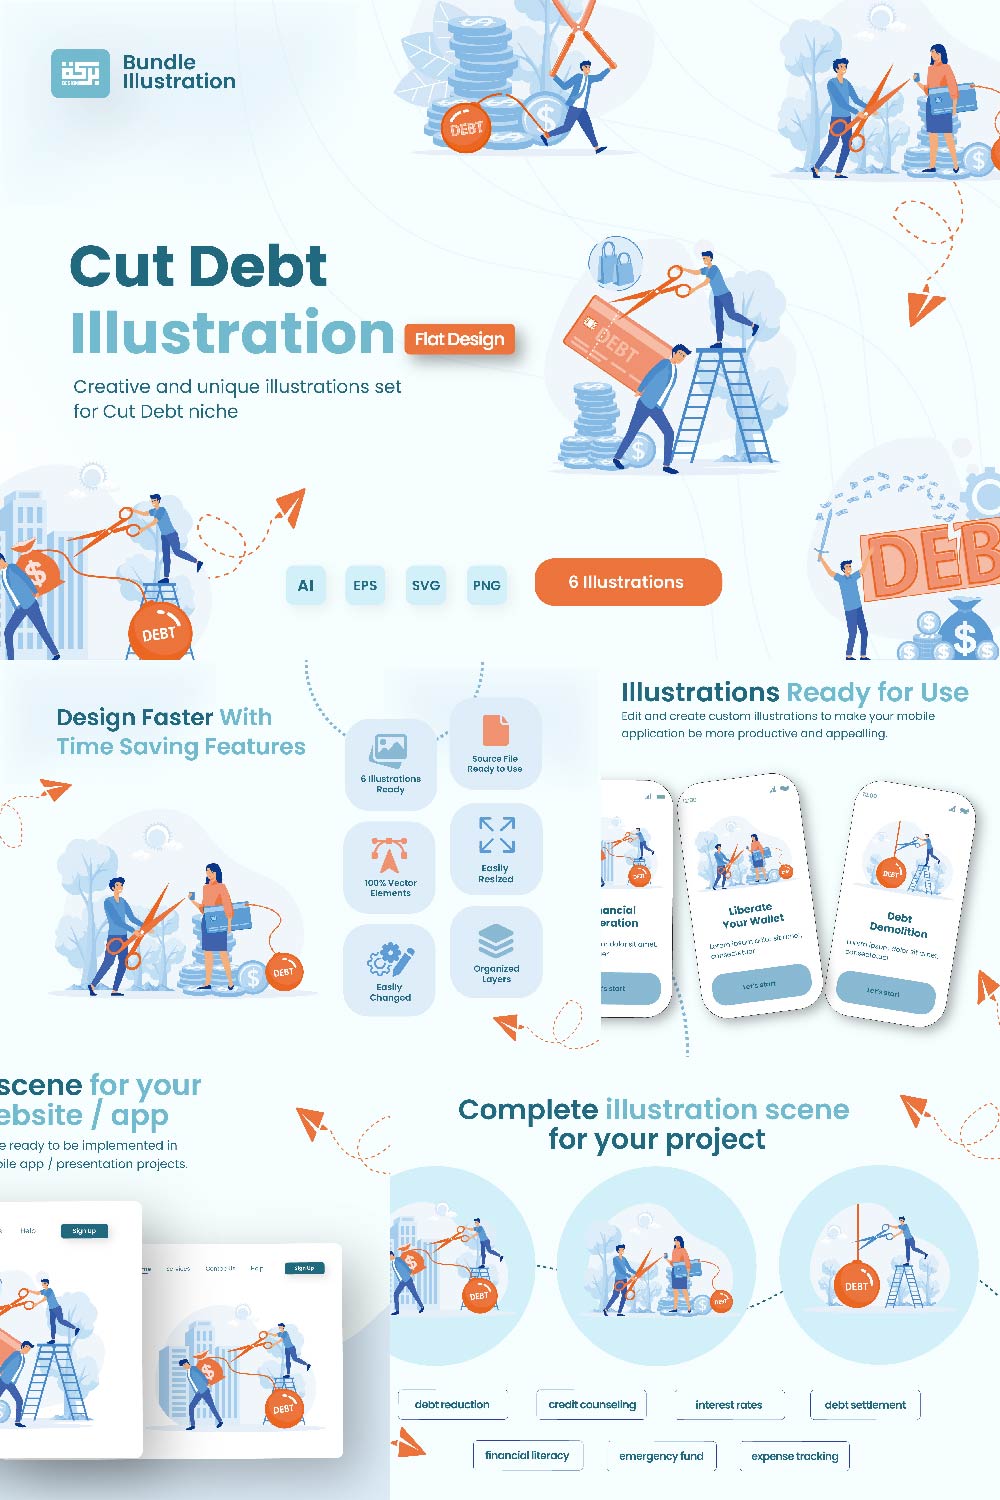 Illustration Design Cut Debt pinterest preview image.